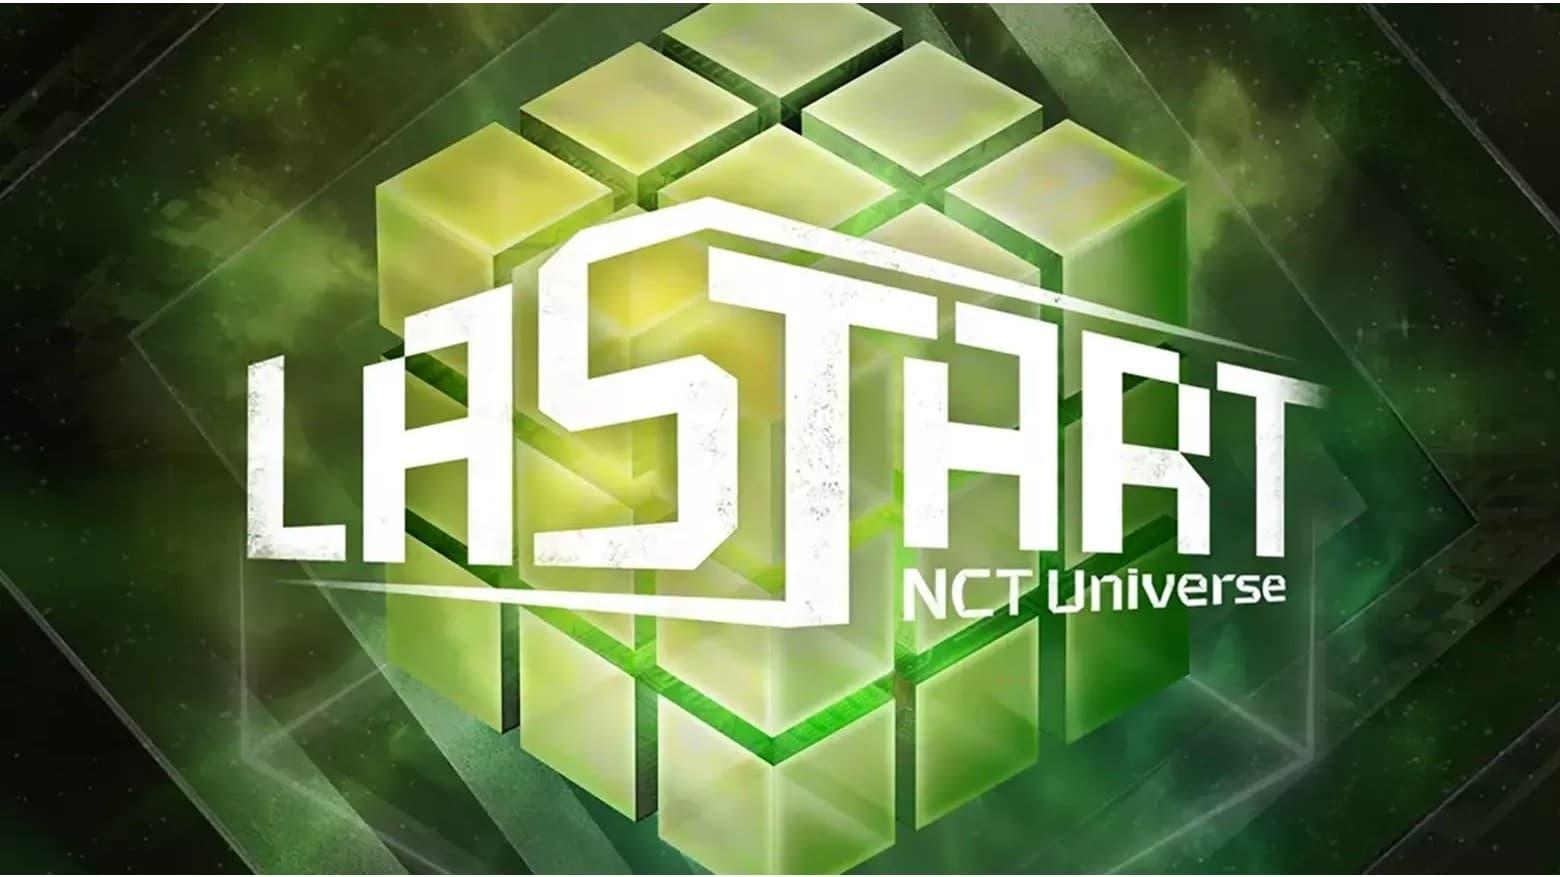 NCT Universe: LASTART backdrop